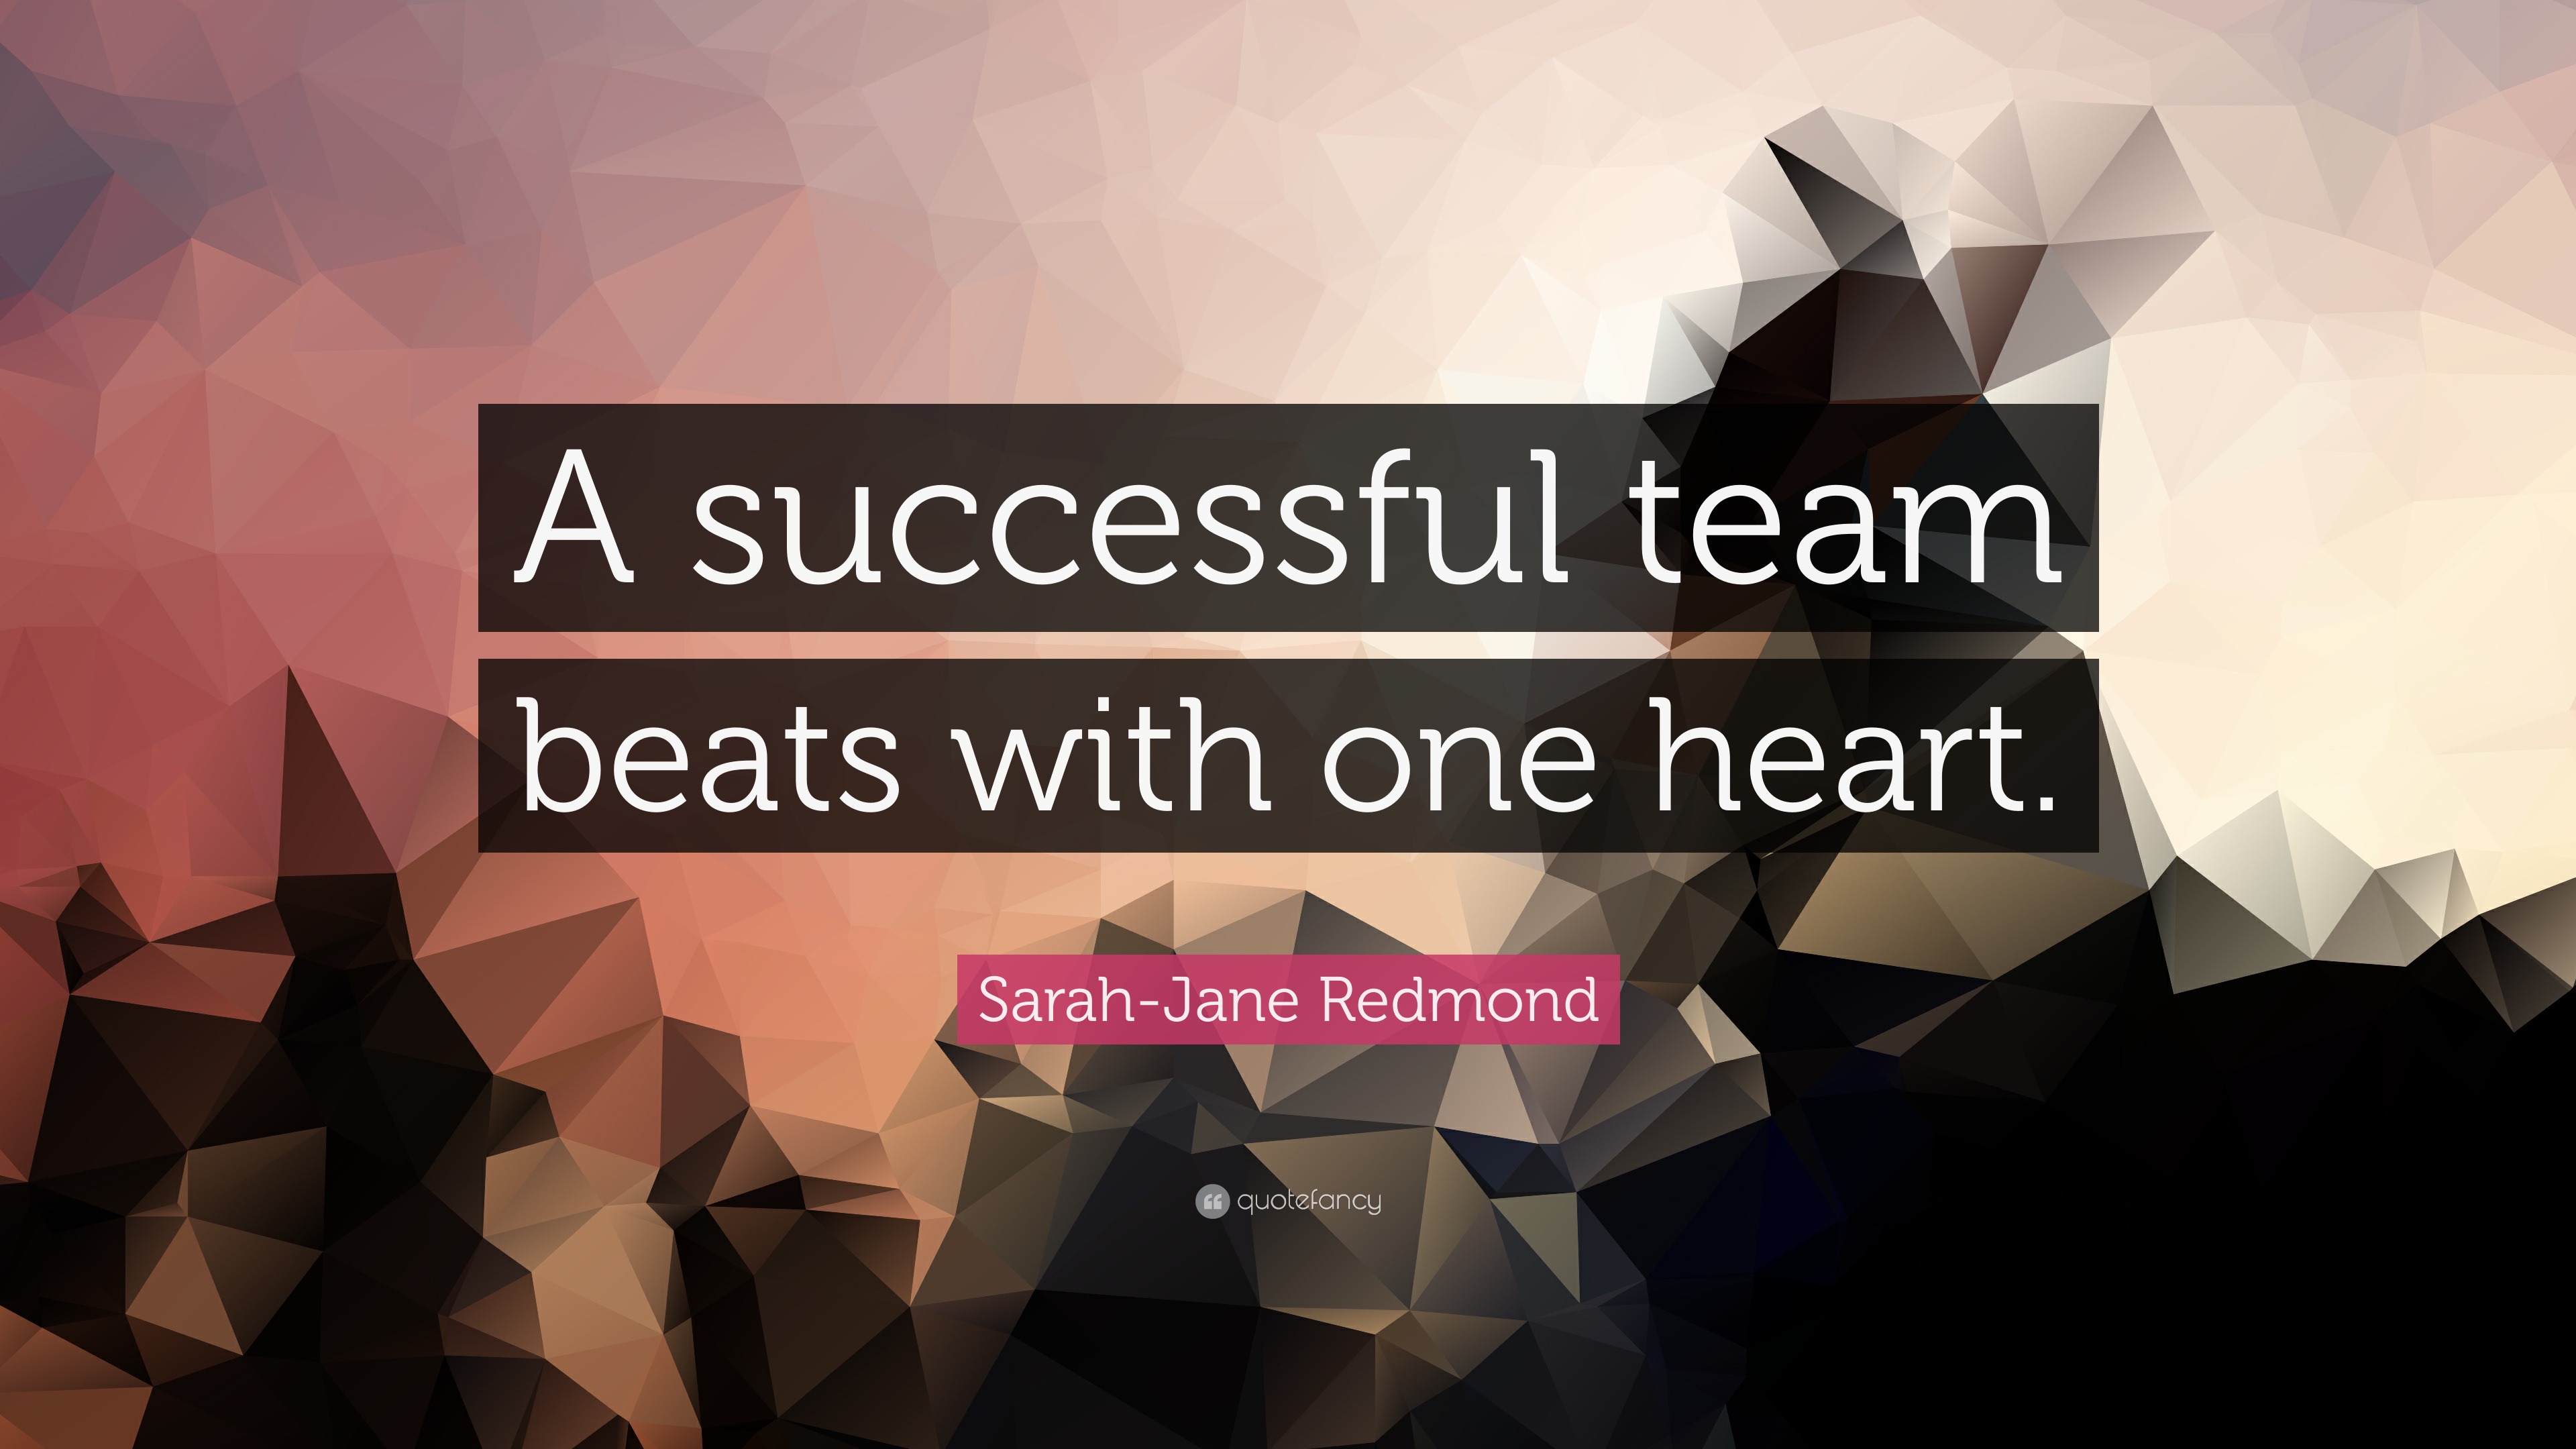 Byg op hjemmehørende mund Sarah-Jane Redmond Quote: “A successful team beats with one heart.”